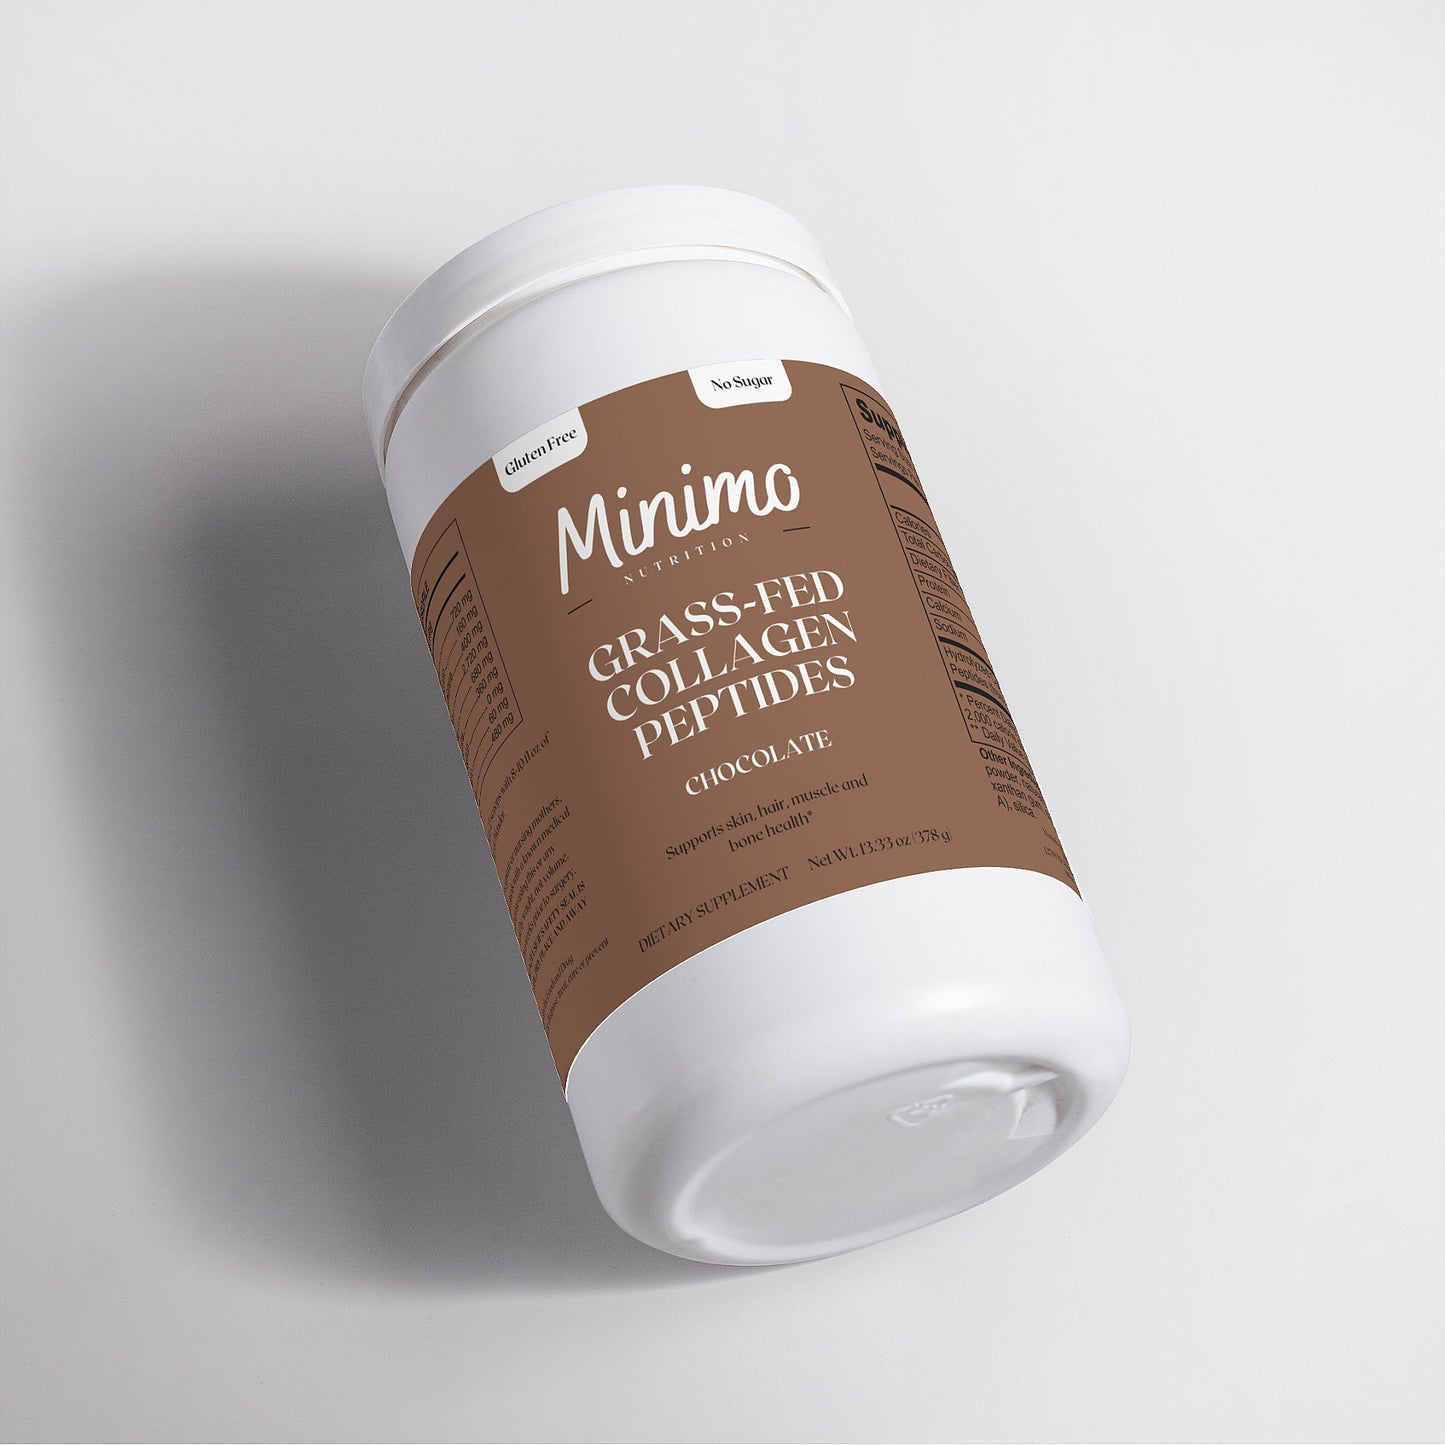 Minimo Nutrition Grass-Fed Collagen Peptides Powder (Chocolate), 13.3 oz.